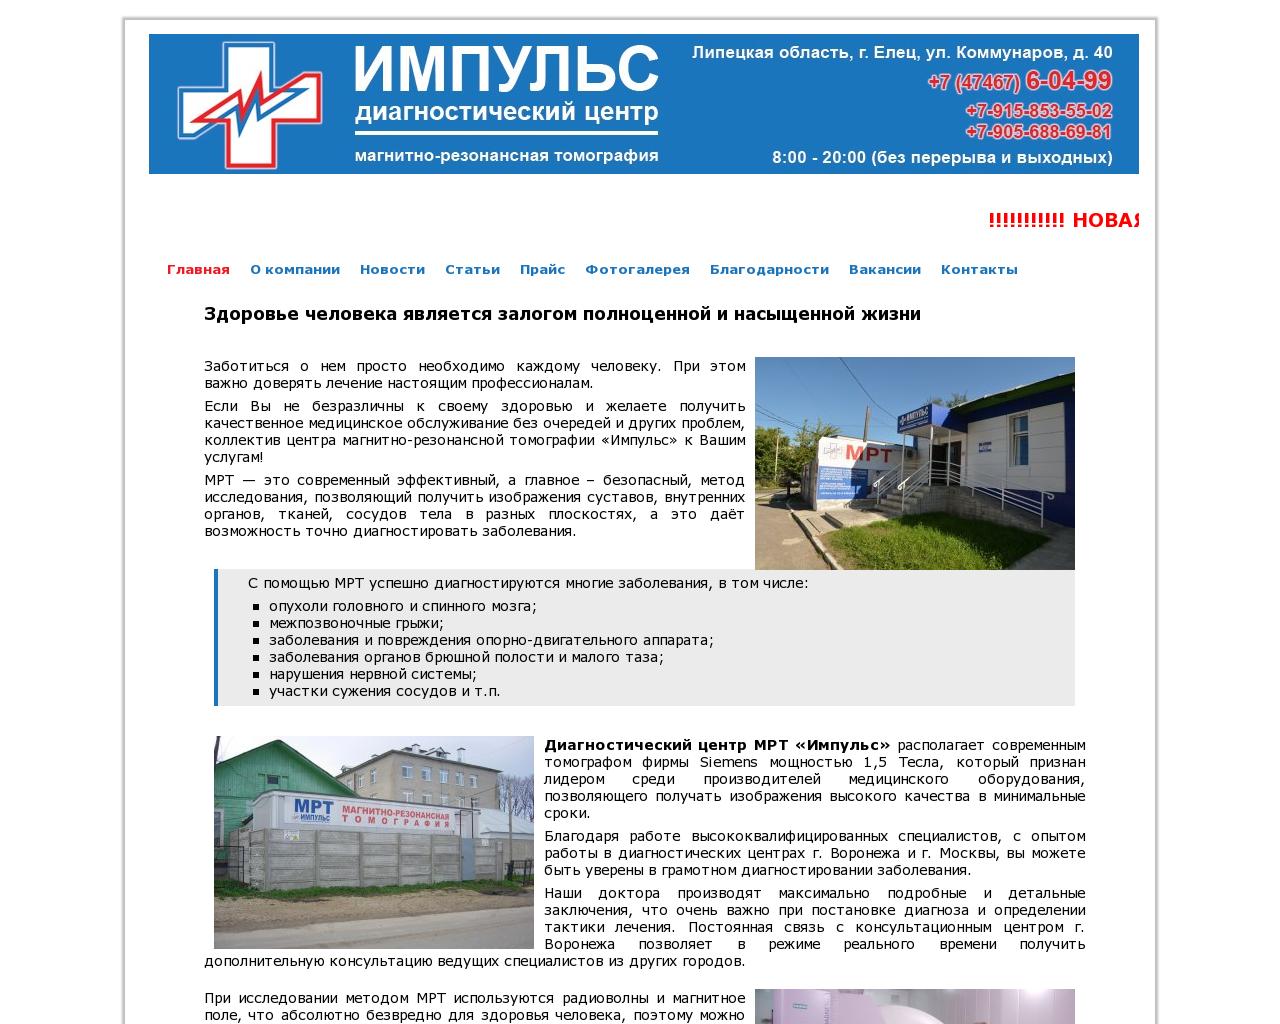 Изображение сайта mrt-elets.ru в разрешении 1280x1024